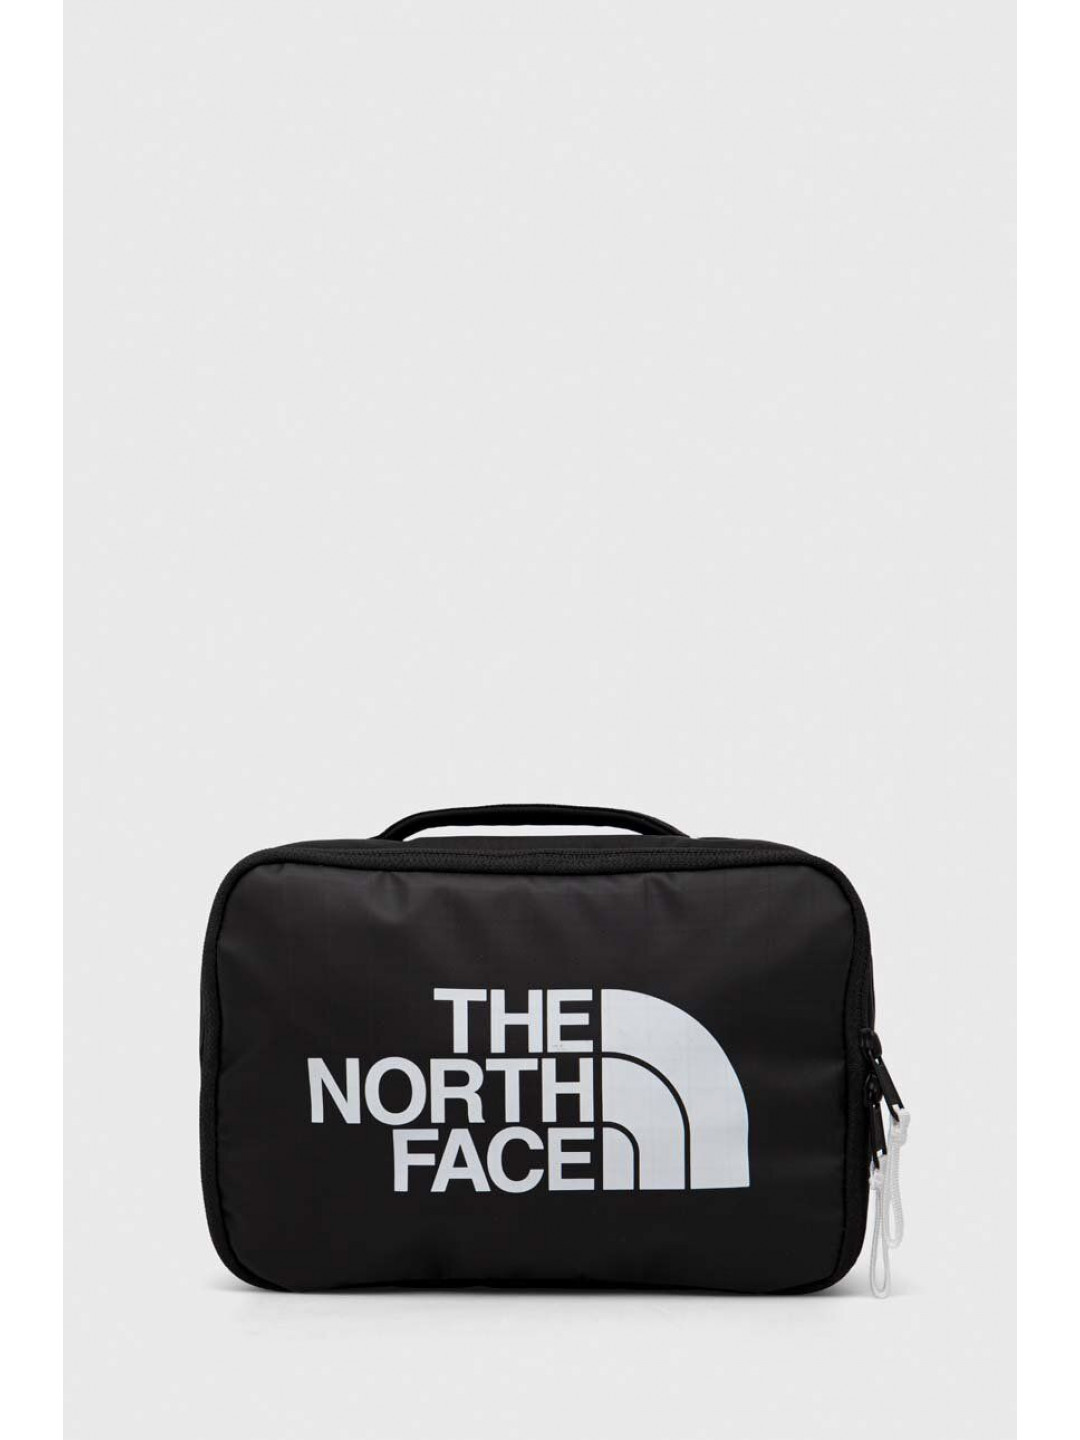 Kosmetická taška The North Face černá barva NF0A81BLKY41